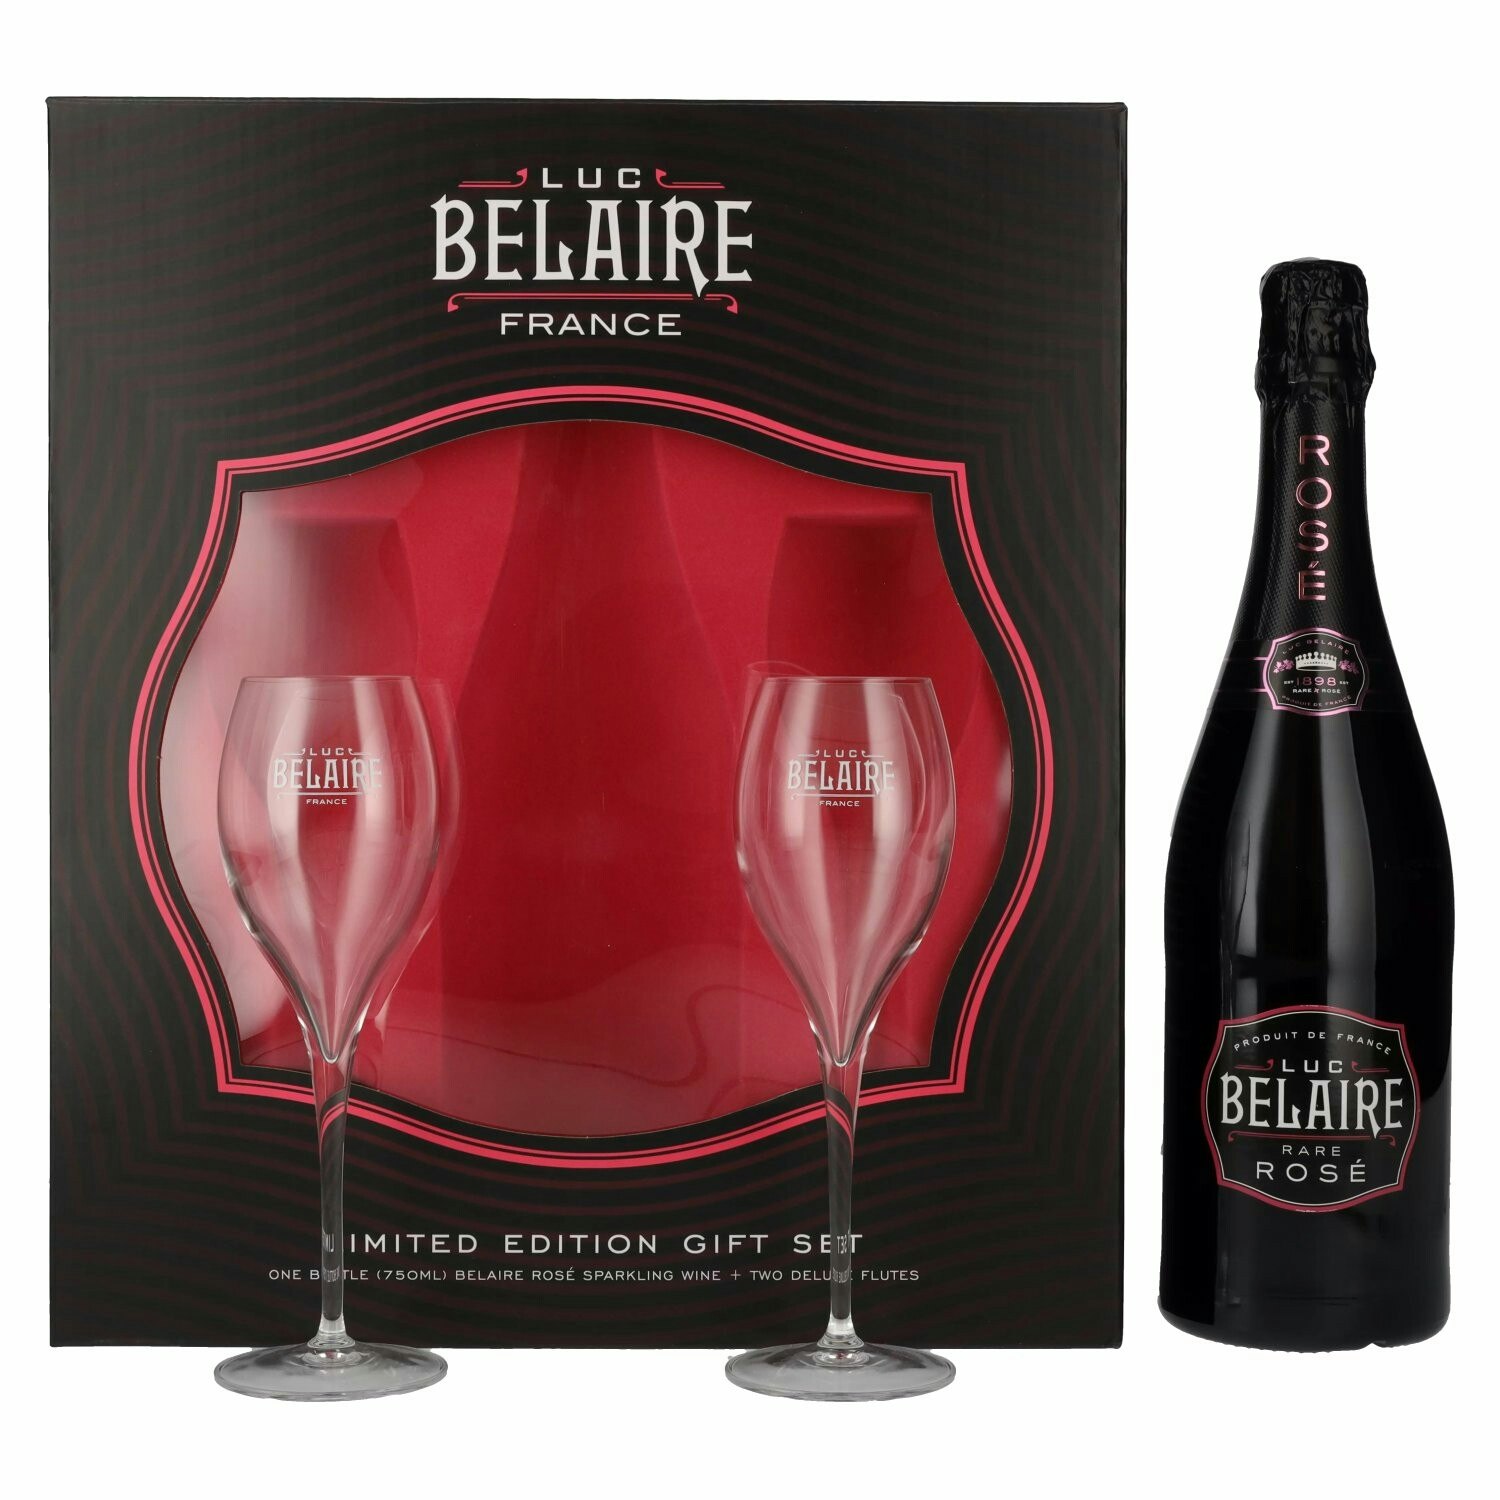 Luc Belaire Rare Rosé 12,5% Vol. 0,75l in Giftbox with 2 glasses